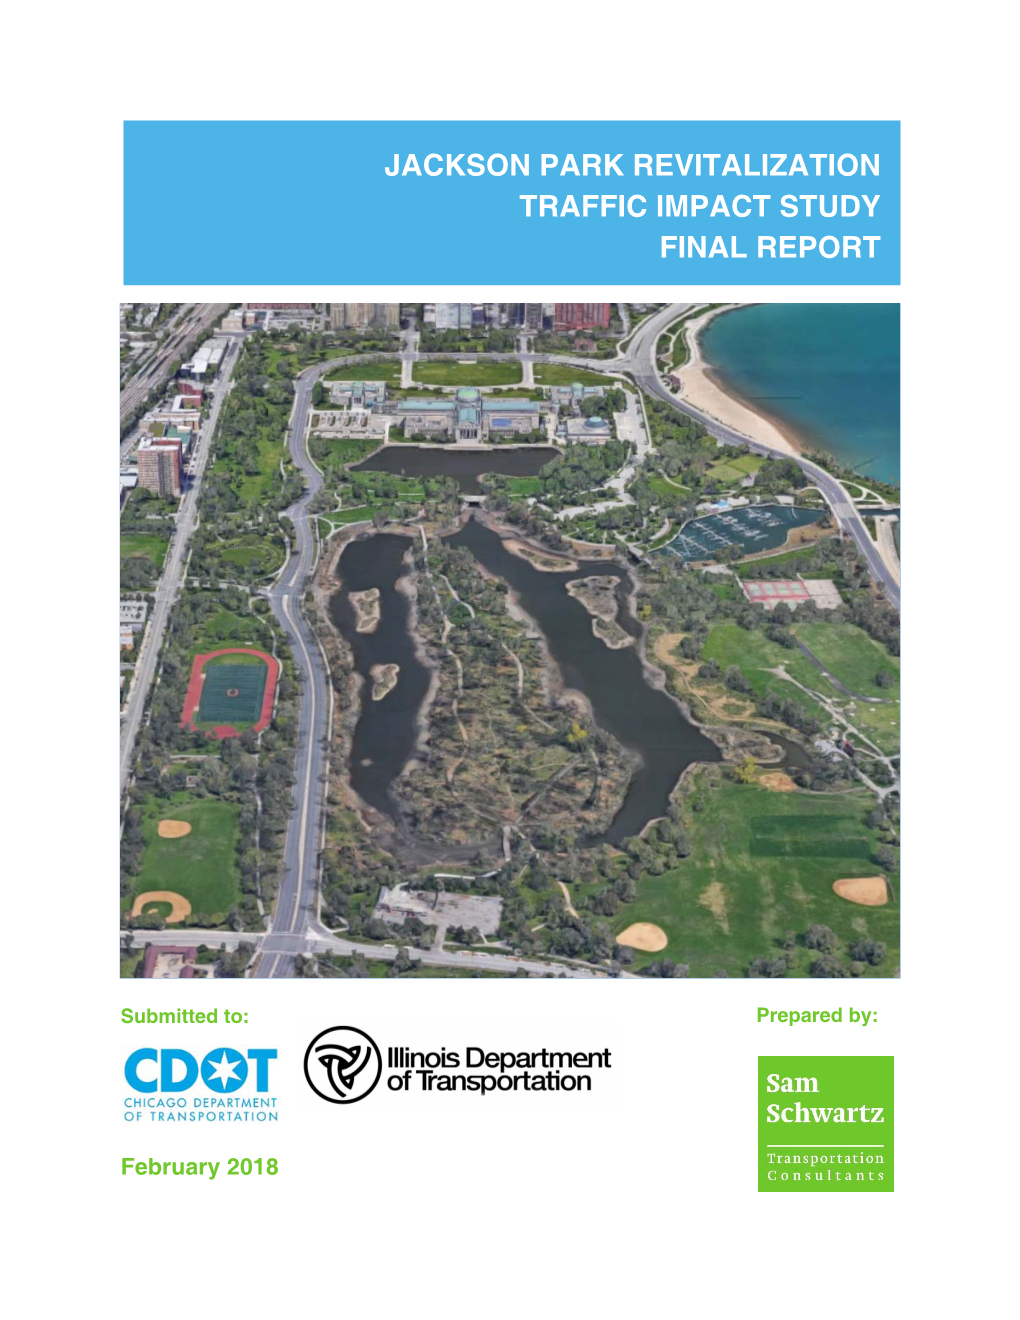 Jackson Park Revitalization Traffic Impact Study Final Report